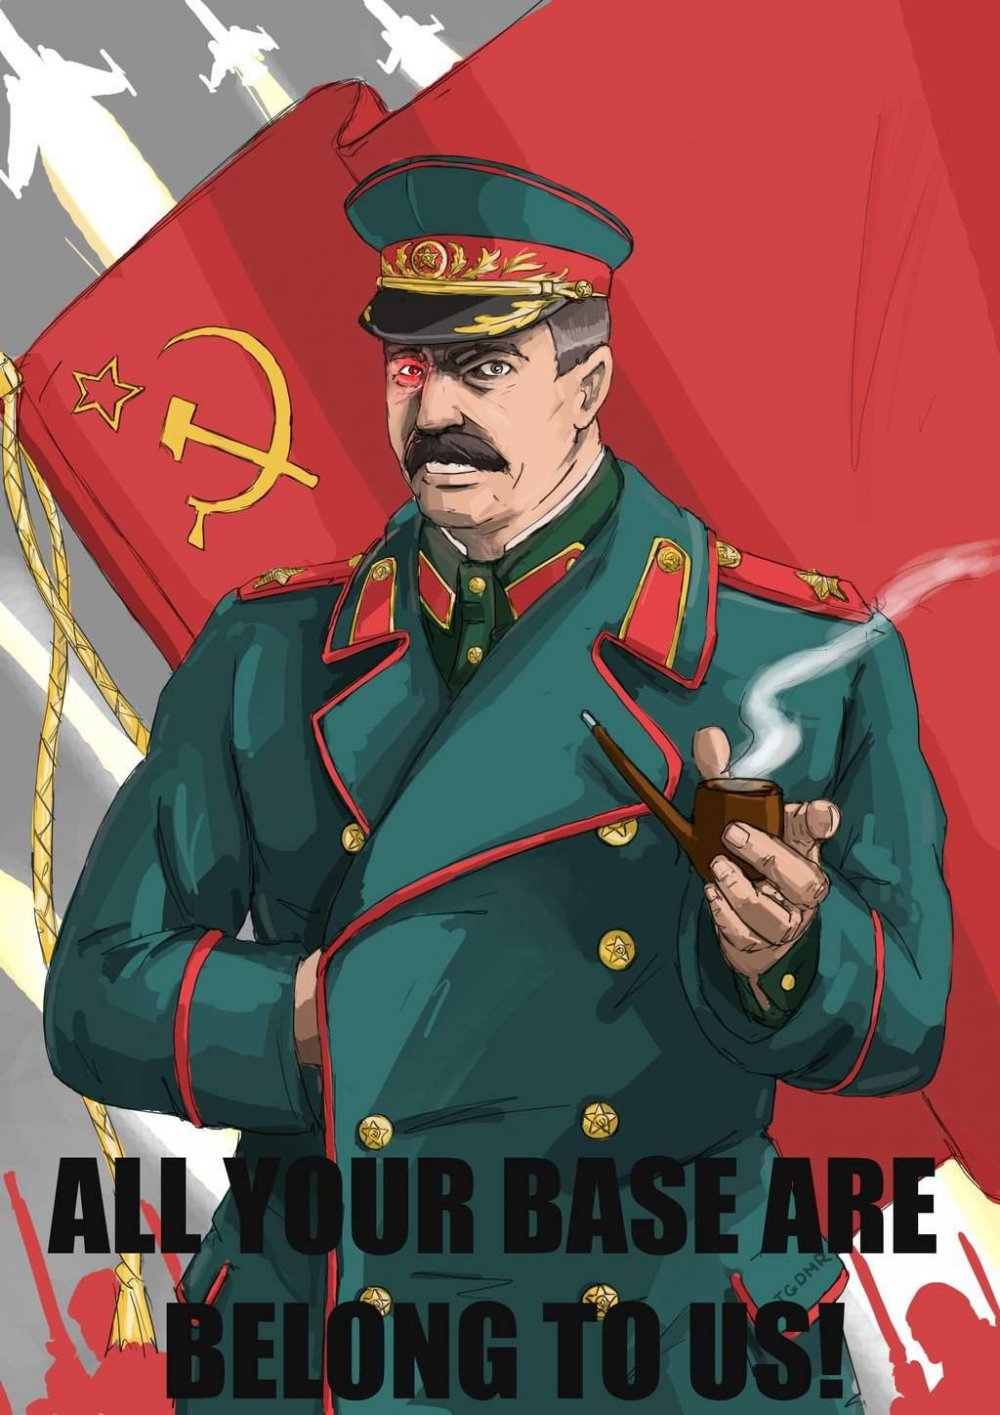 Сталин арт